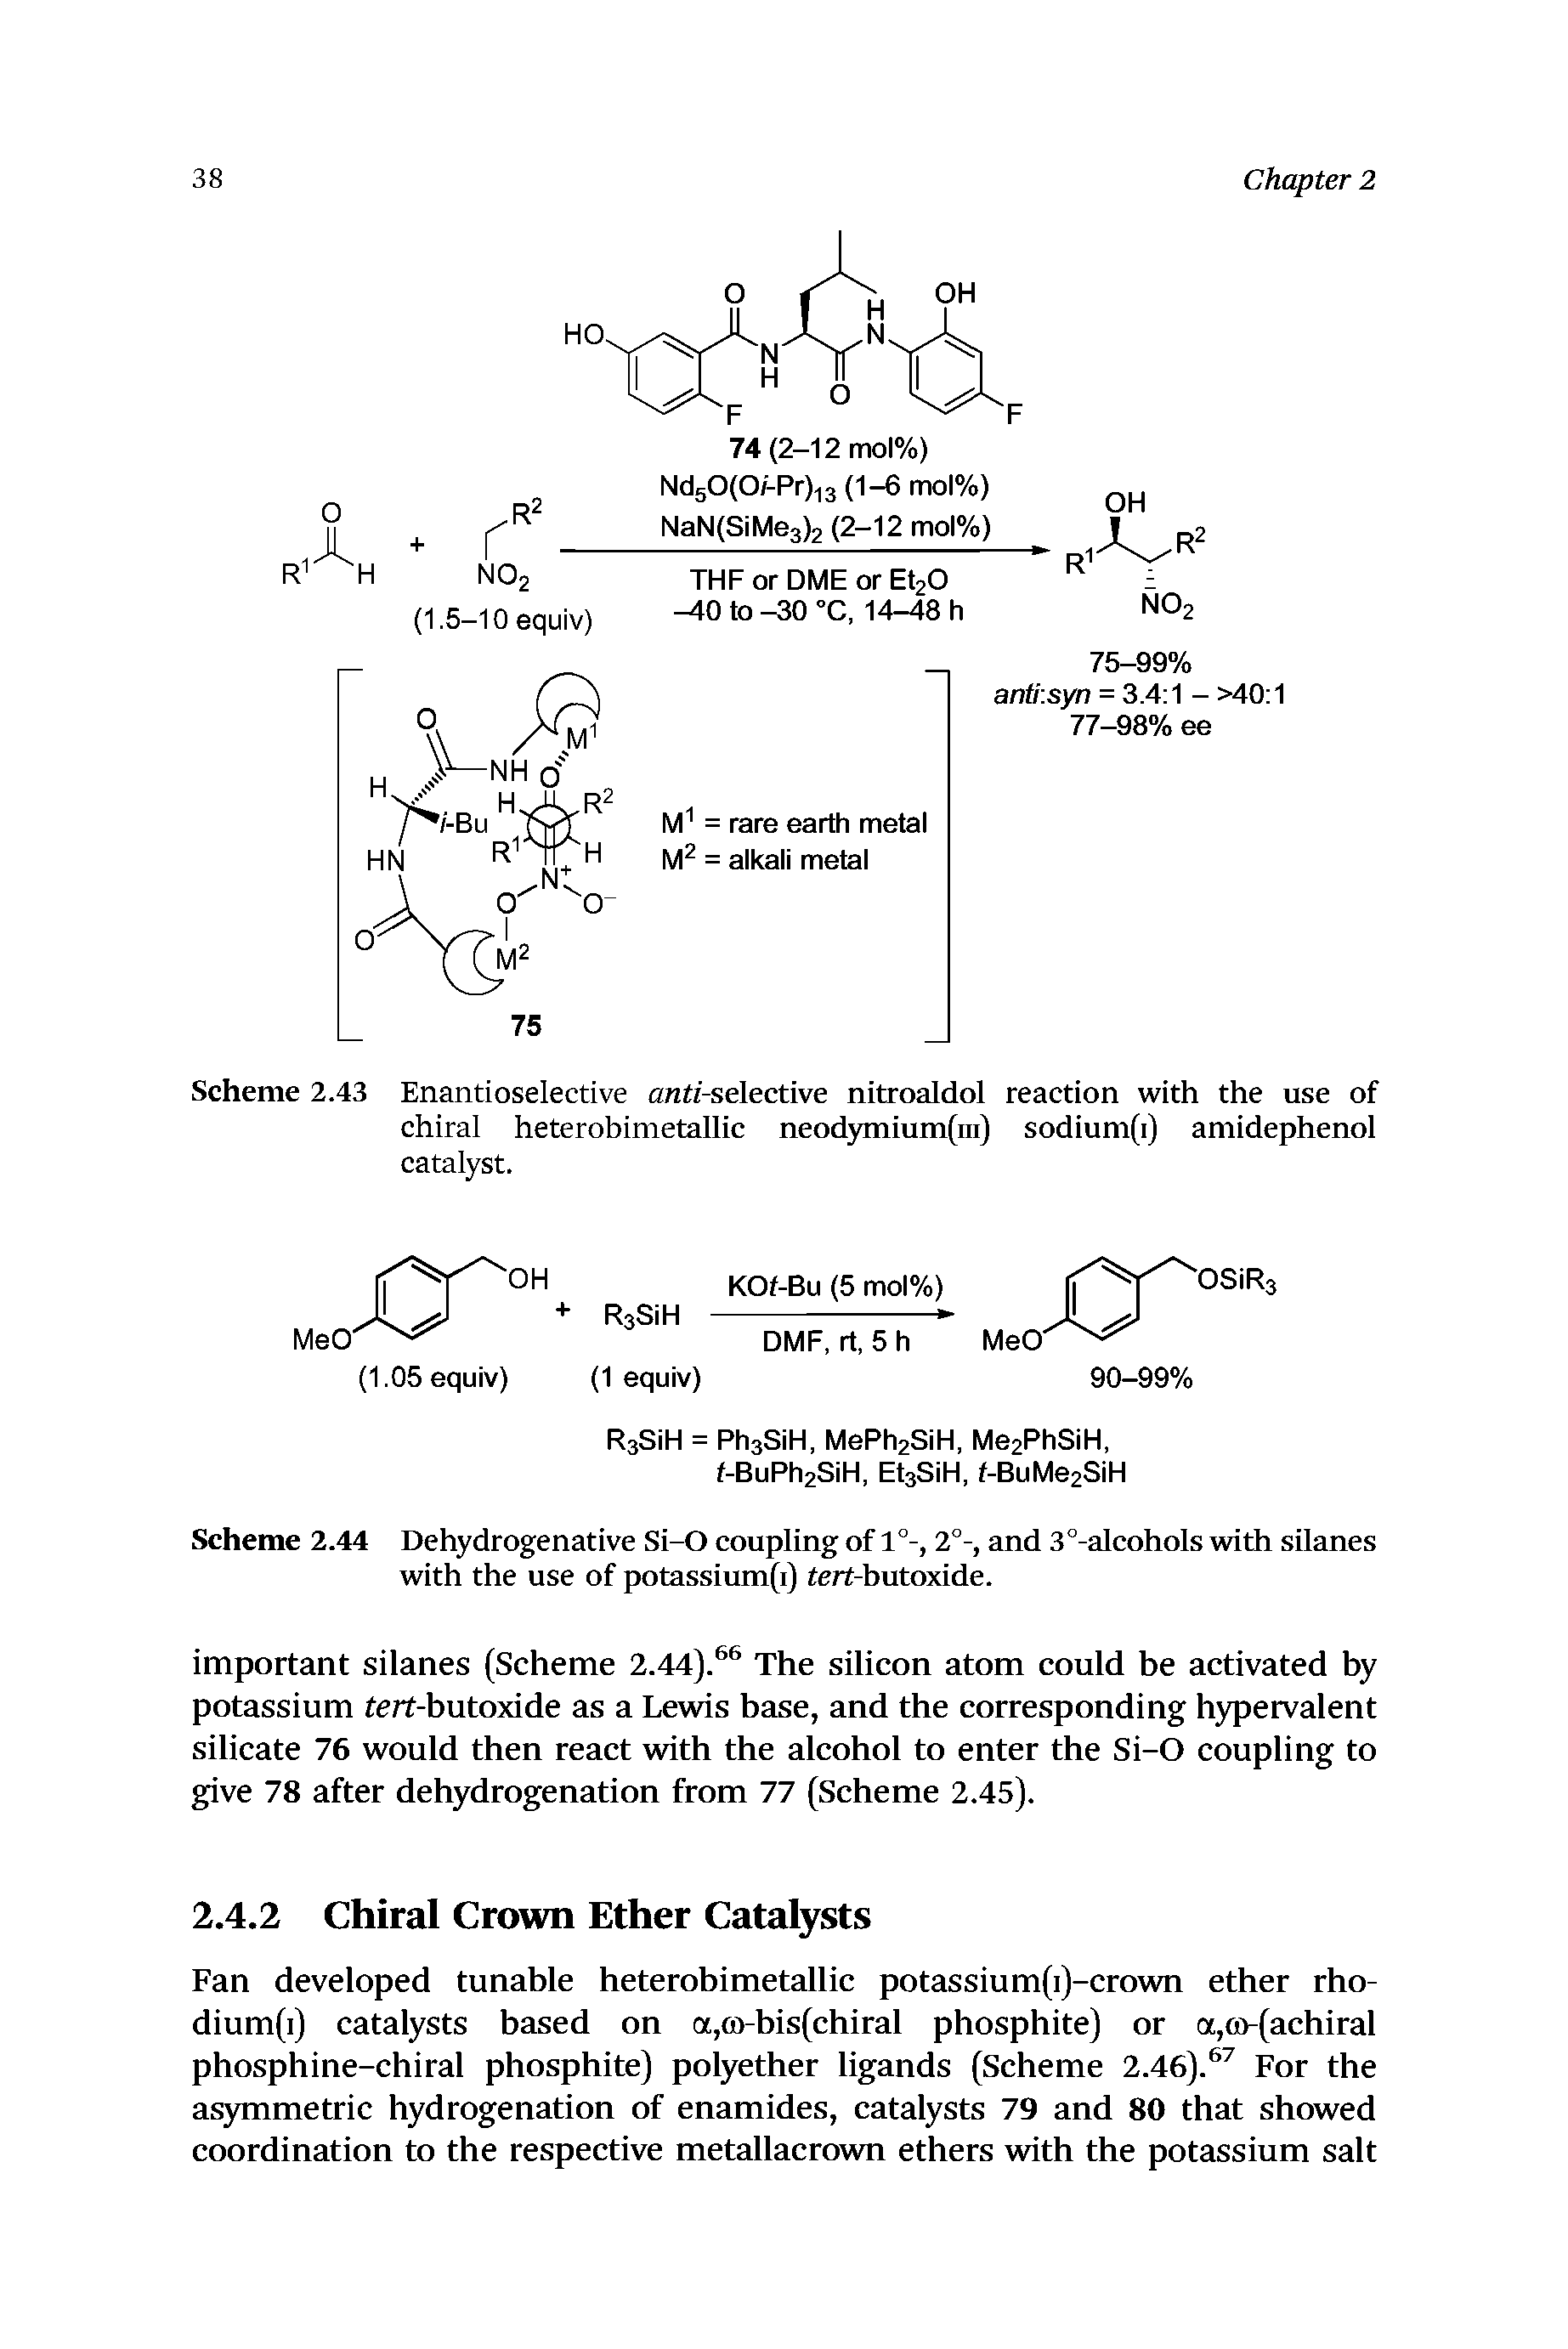 Scheme 2.43 Enantioselective anti-selective nitroaldol reaction with the use of chiral heterobimetallic neodymium(iii) sodium(i) amidephenol catalyst.